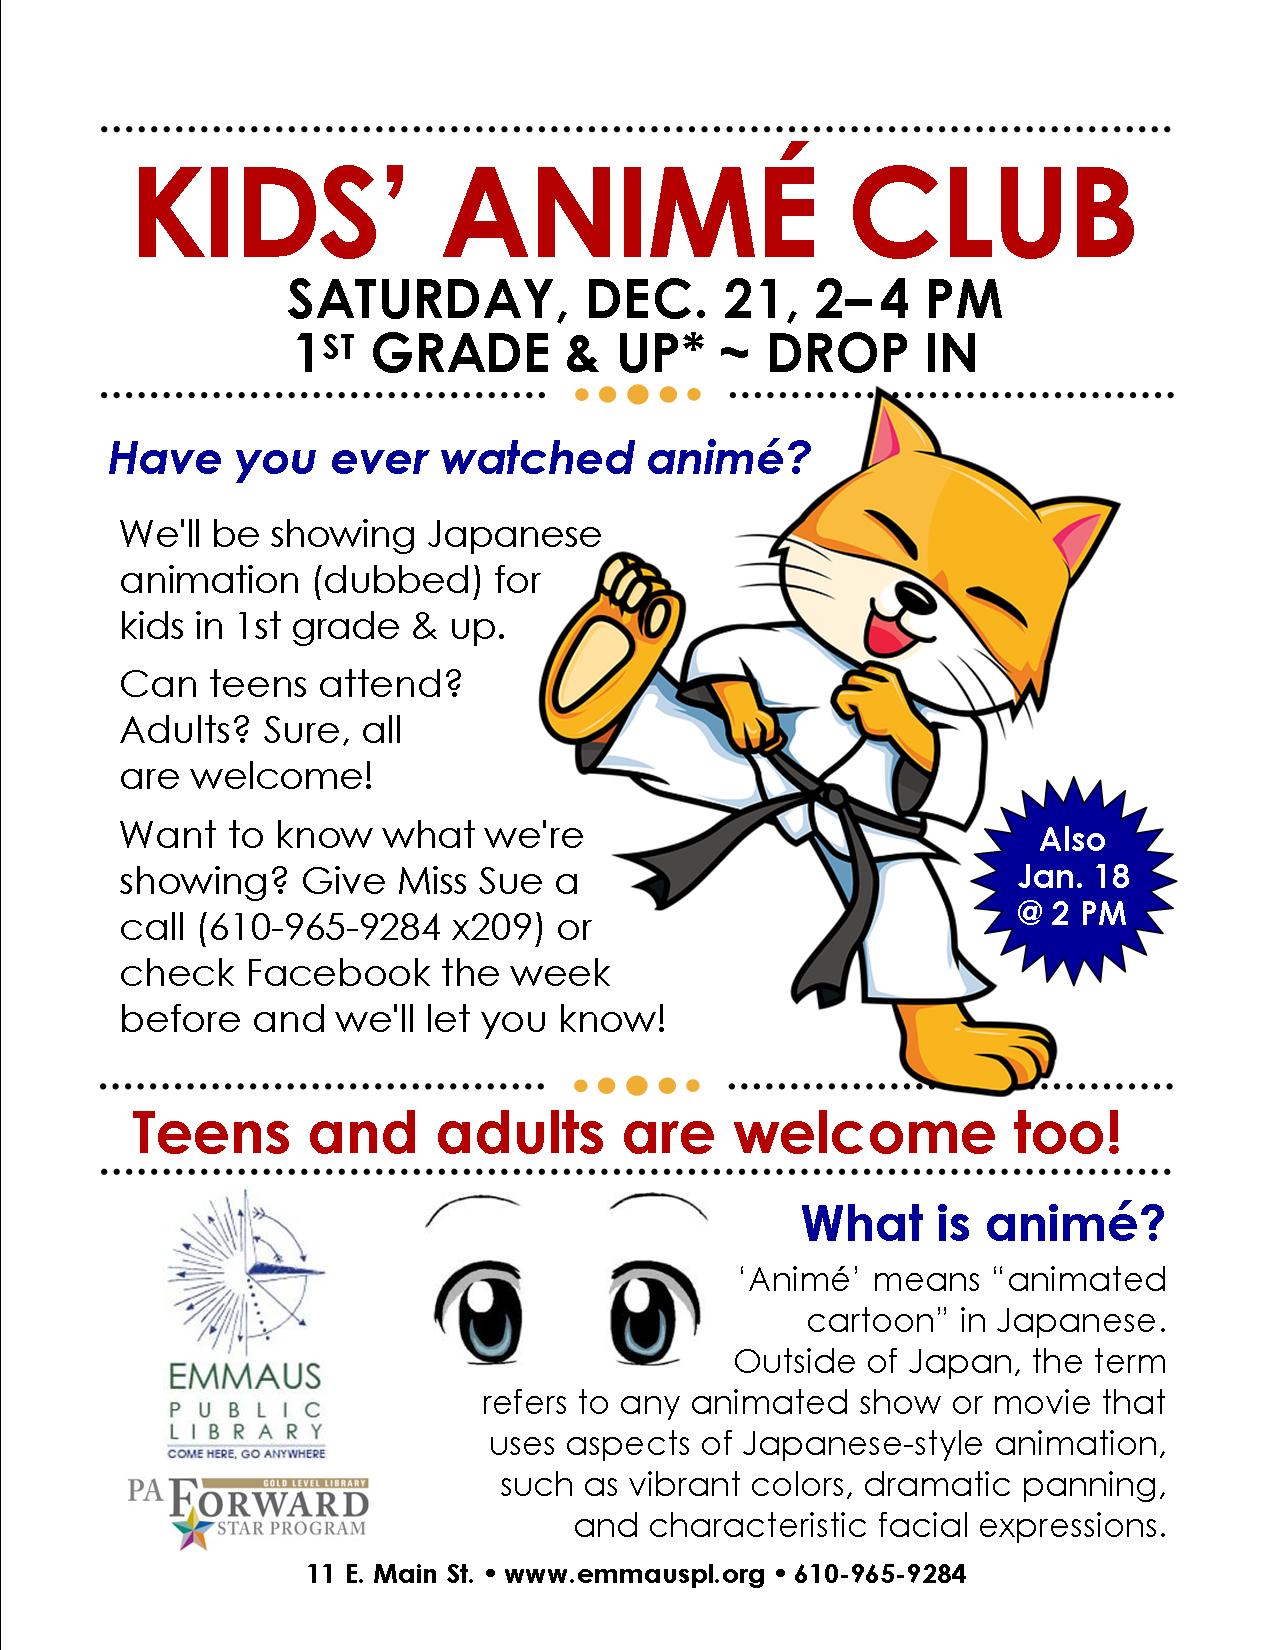 Kids' Animé Club - Emmaus Public Library